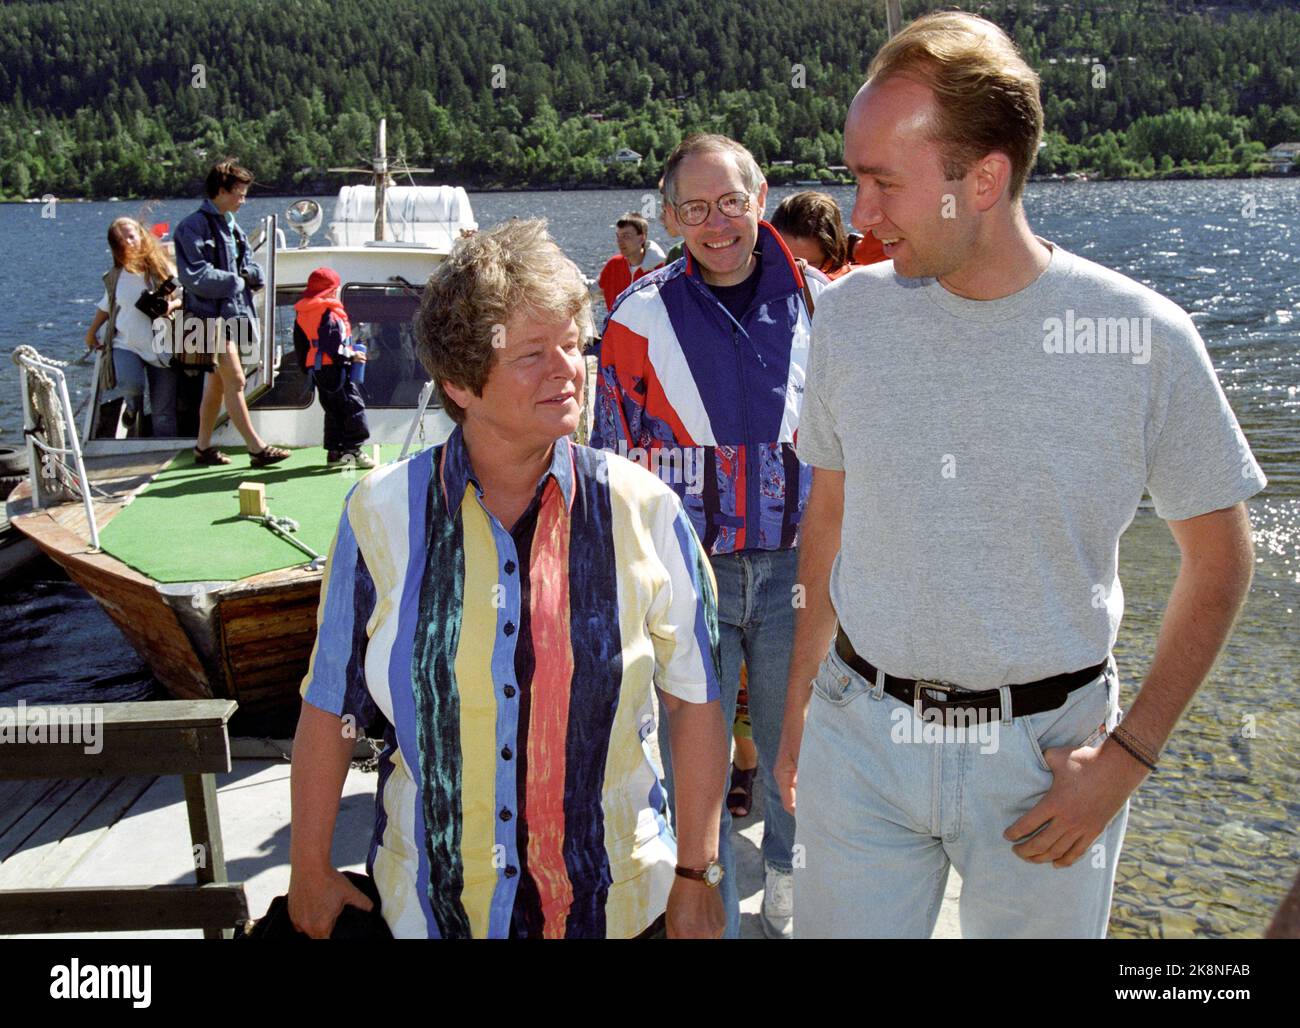 Utøya 19960718. AUF leader Trond Giske welcomes Prime Minister Gro Harlem Brundtland who arrives at the AUF camp on Utøya in Tyrifjorden. Martin Kolberg (back). Photo: Rune Petter Ness / NTB / NTB Stock Photo